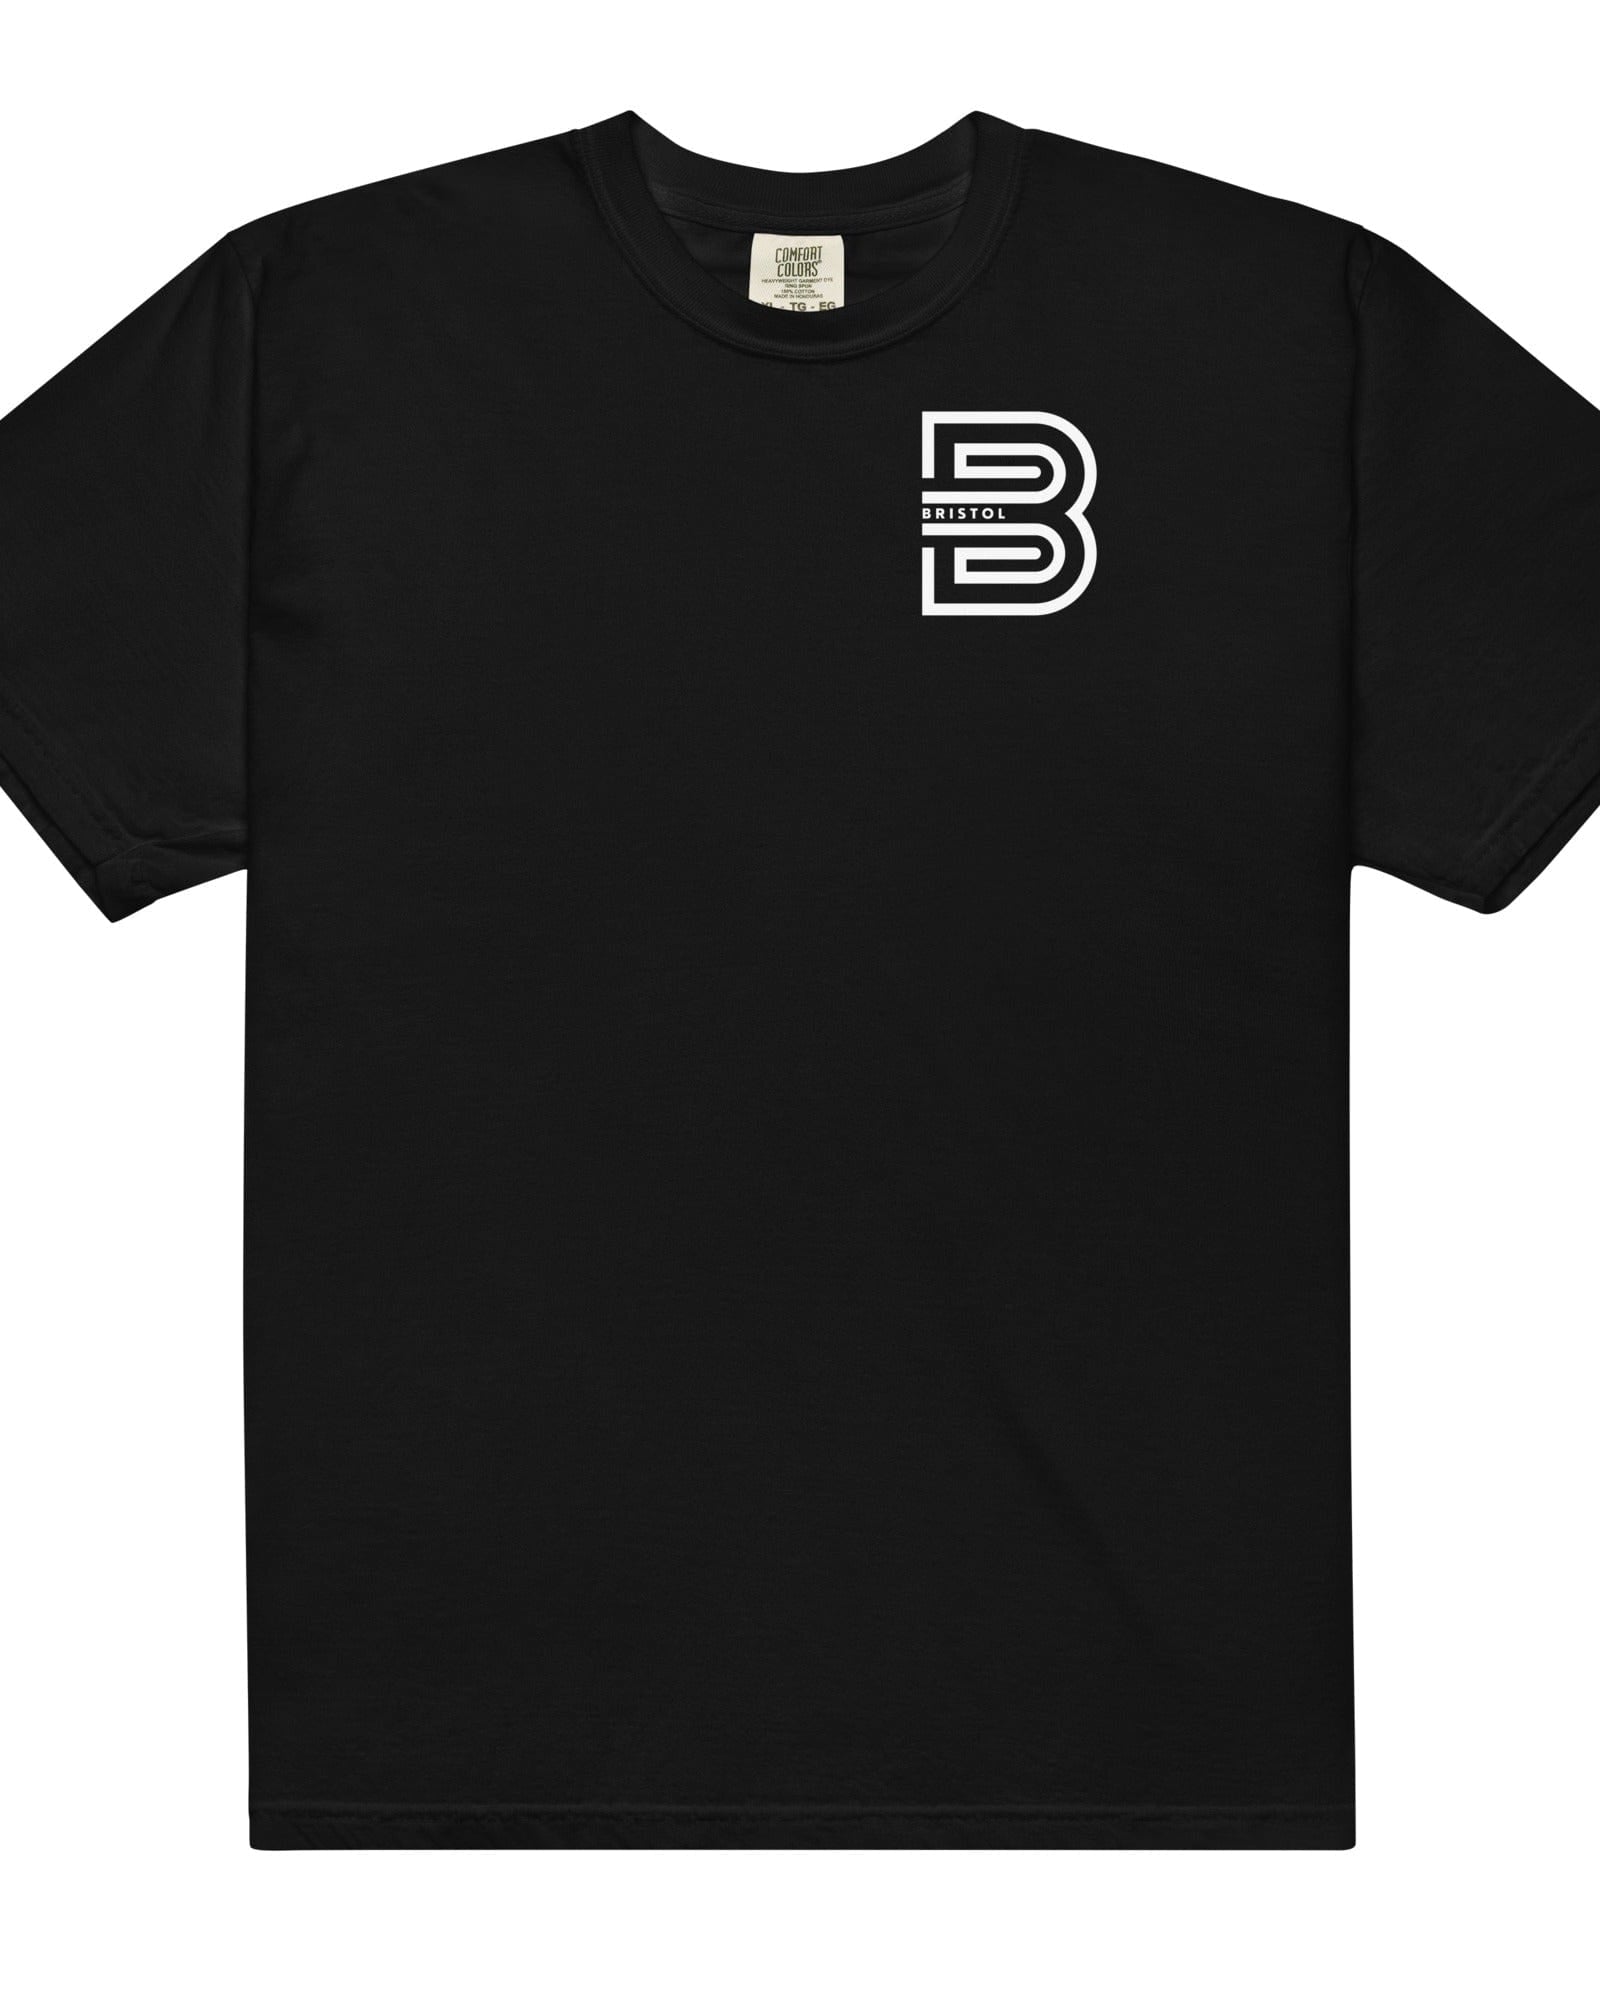 Bristol B T-shirt | Garment-dyed Heavyweight Black / S Shirts & Tops Jolly & Goode